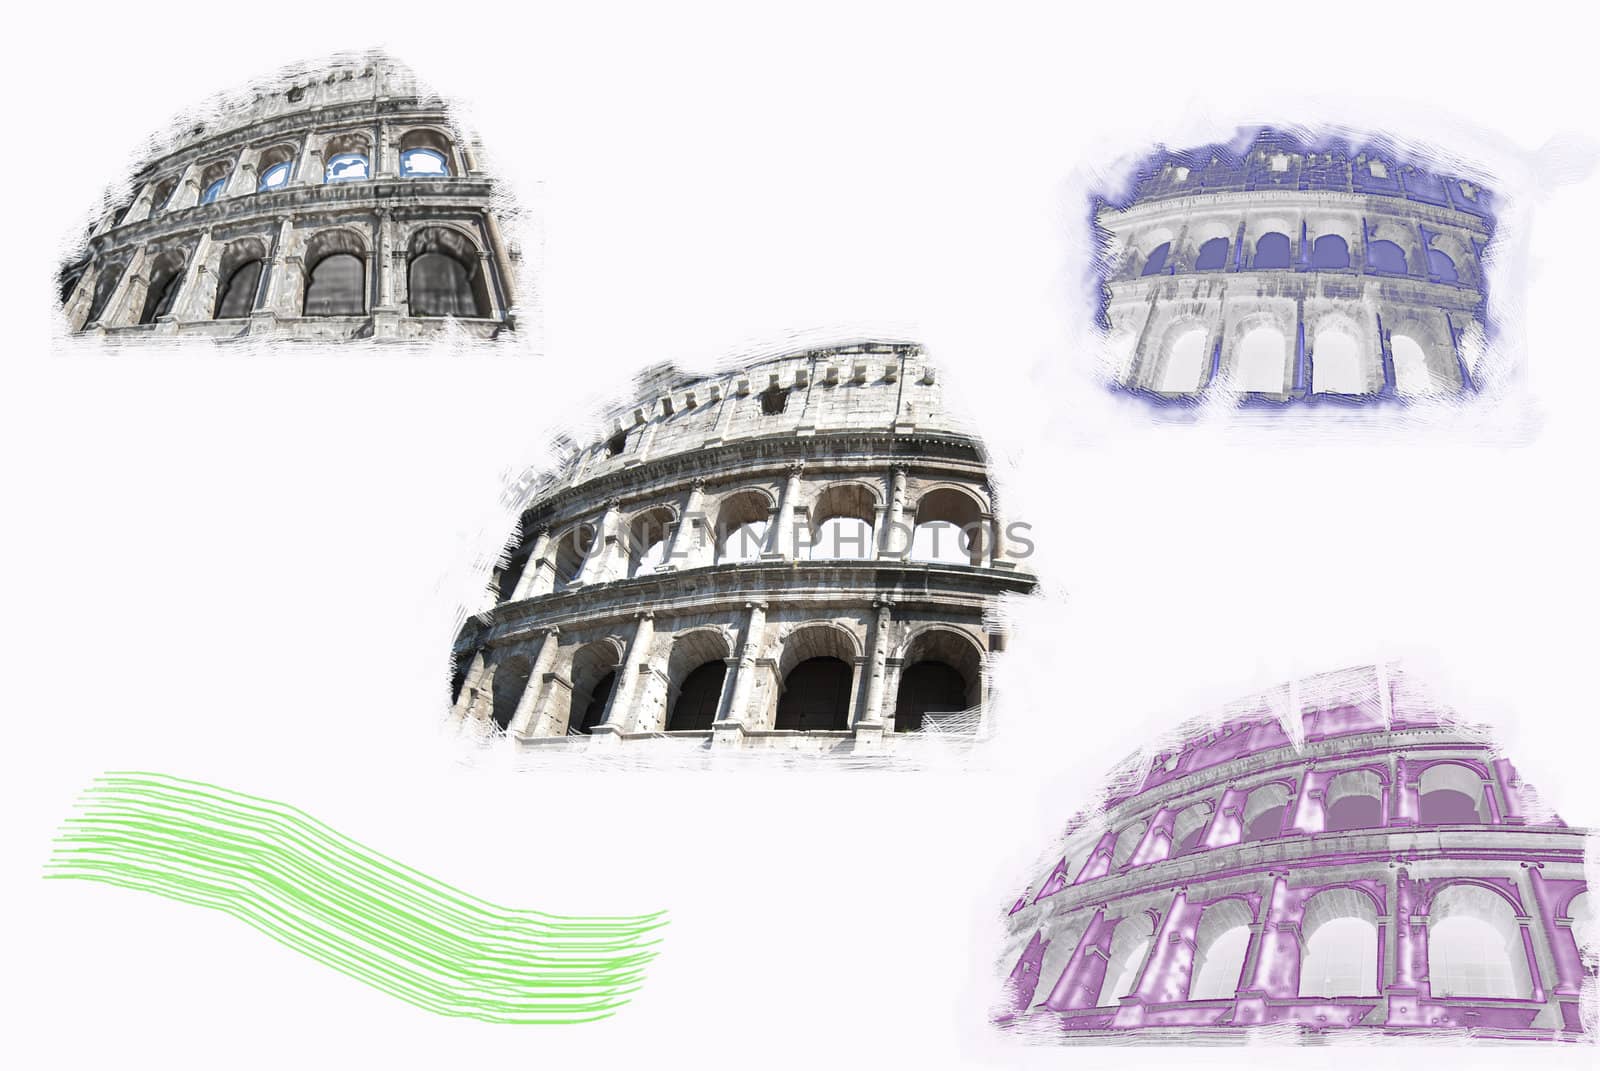 Rome. The Colosseum, romanity's symbol.  Artistic graphic elaboration